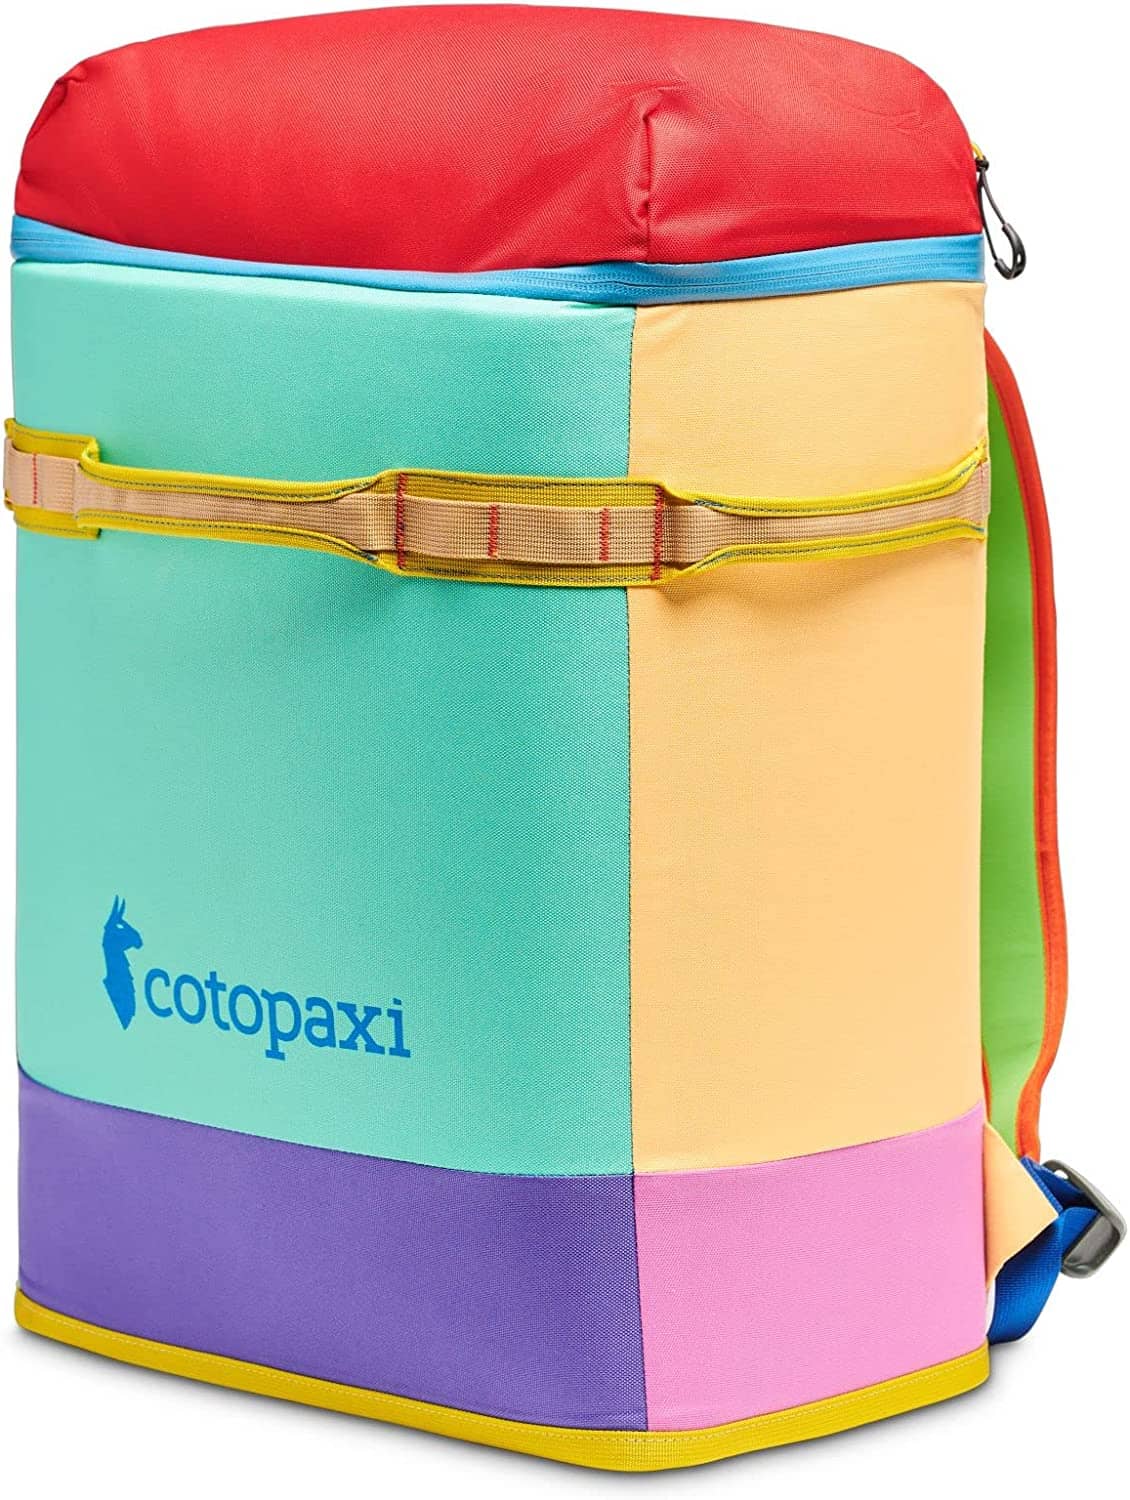 Cotopaxi Hielo 24L Cooler backpack